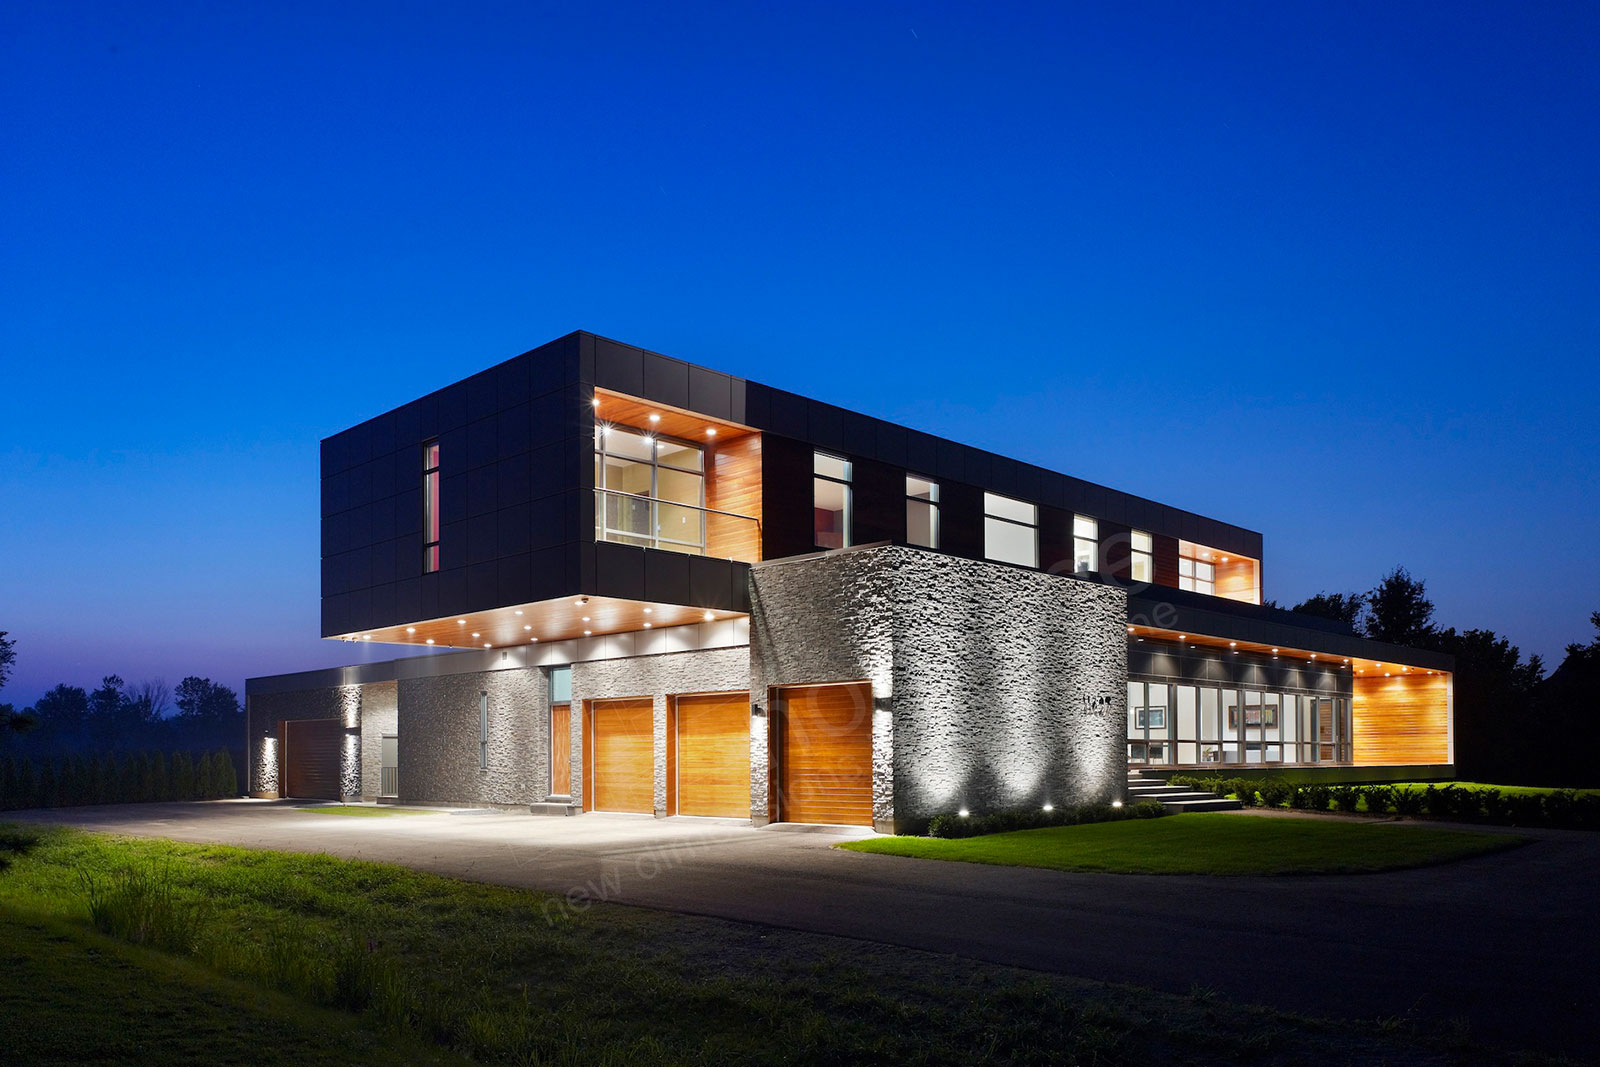 Contemporary Box Design Home with textured grey stone veneer facade